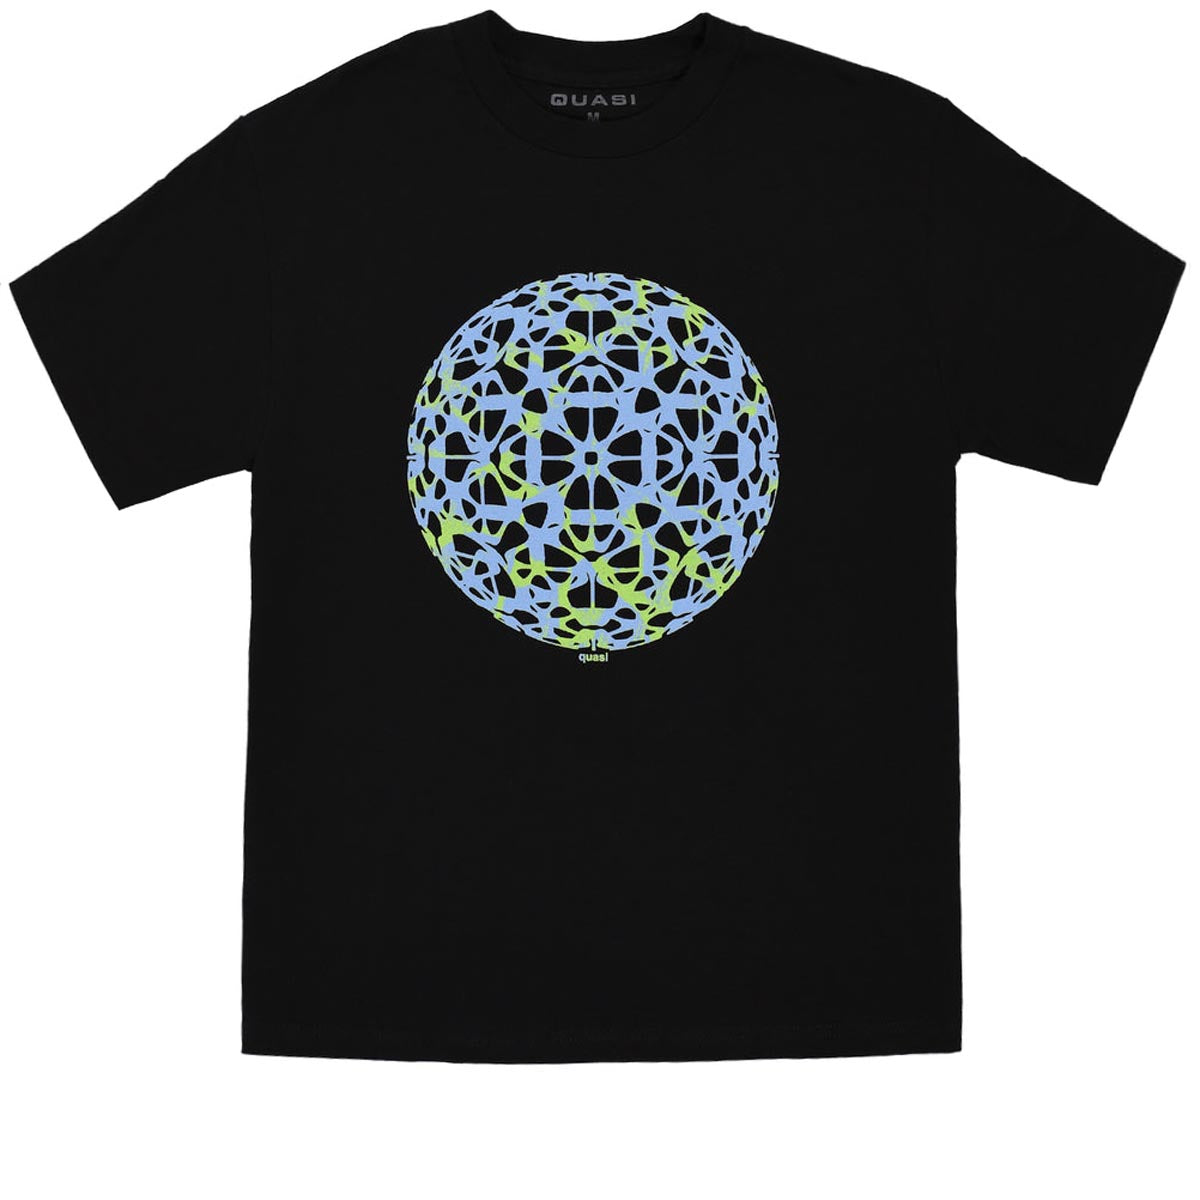 Quasi Globe T-Shirt - Black image 1